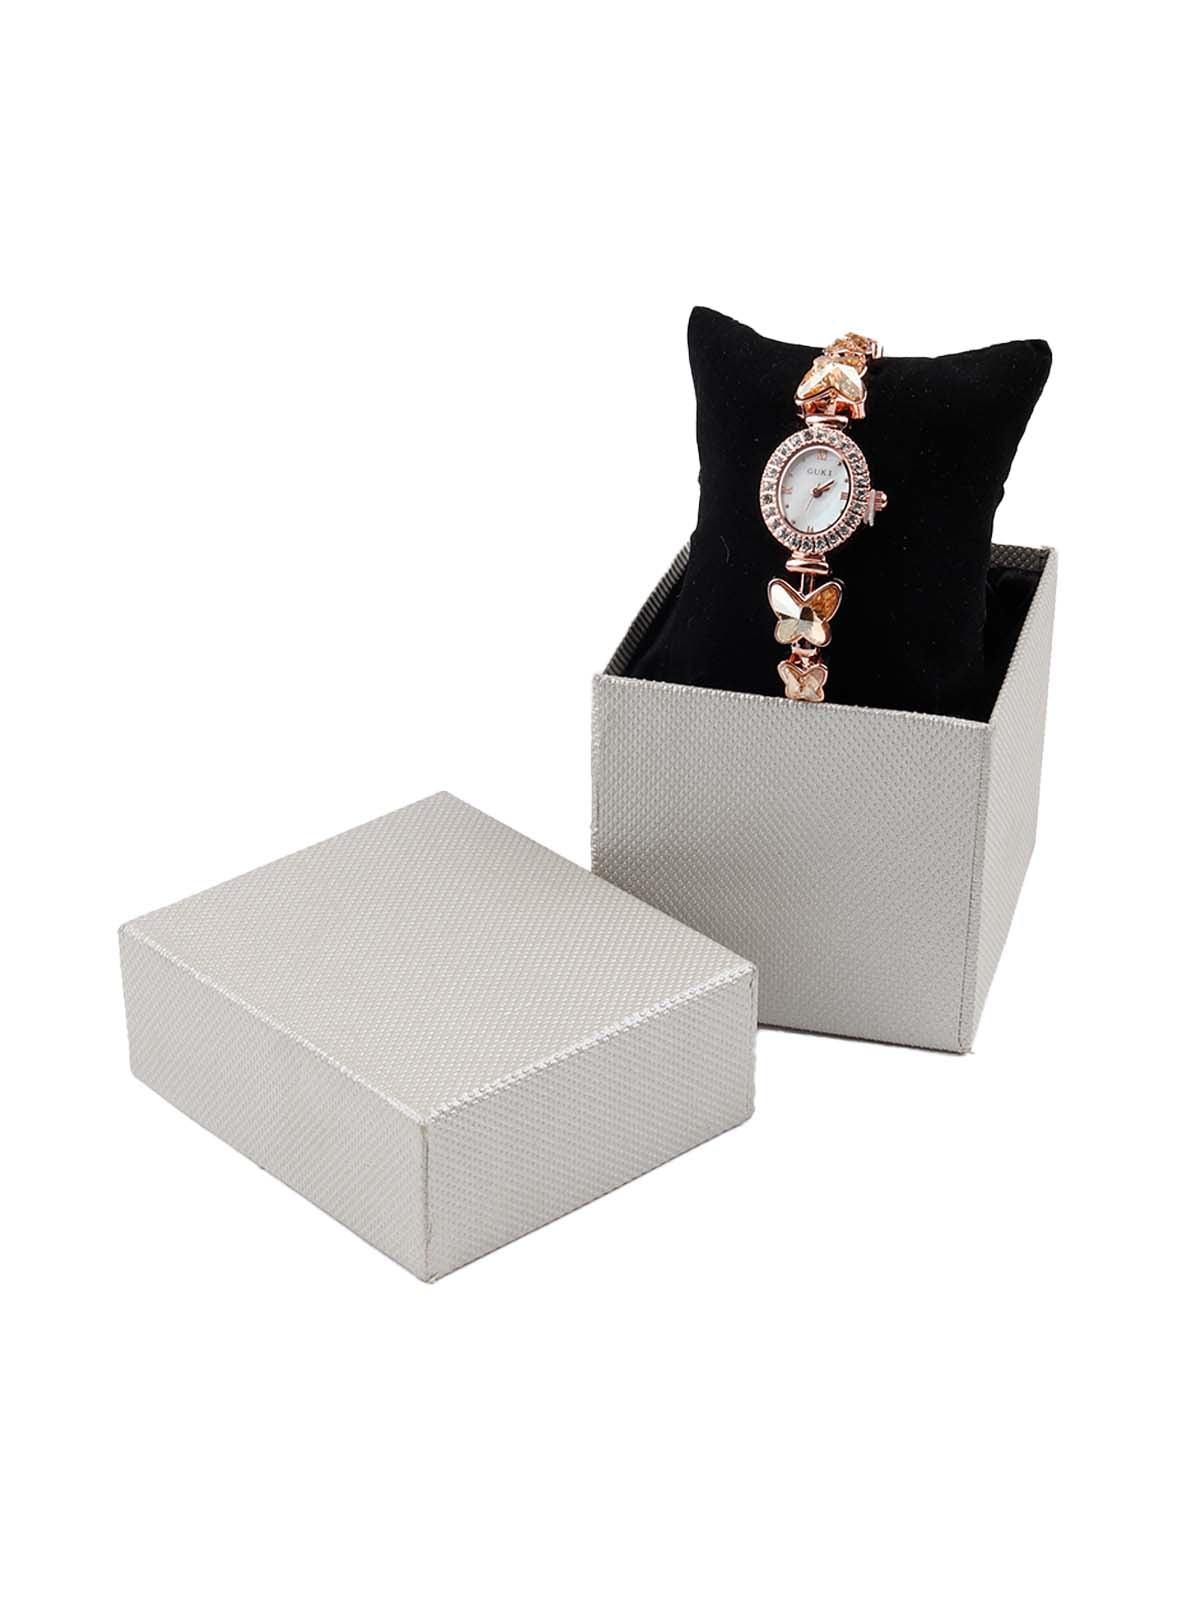 Gold thin wristwatch for women - Odette